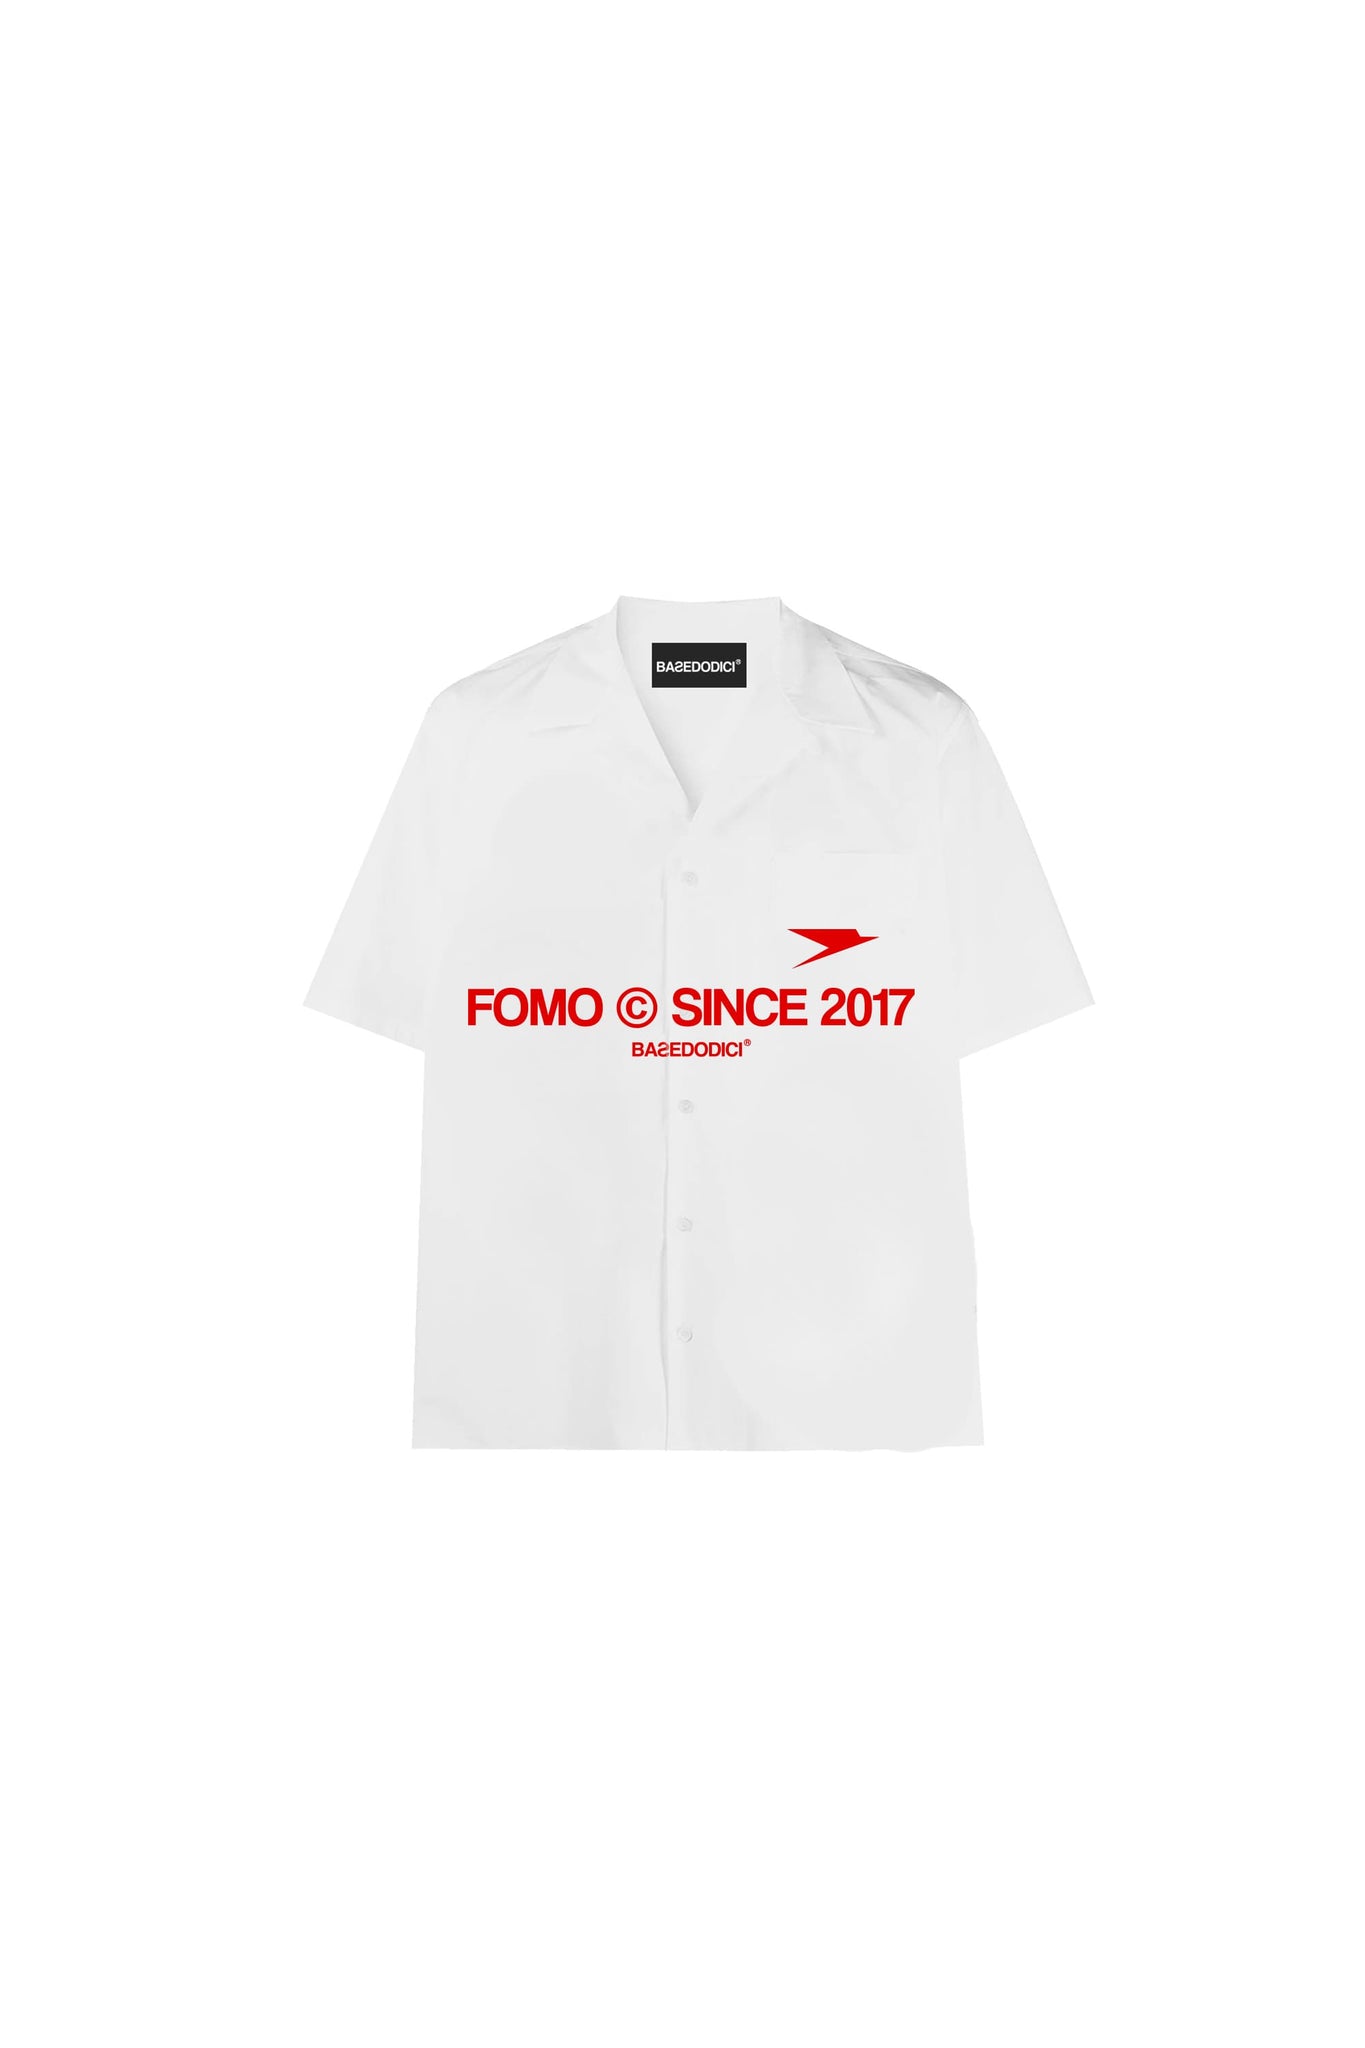 Bowling Shirt "FOMO" Since2017 White